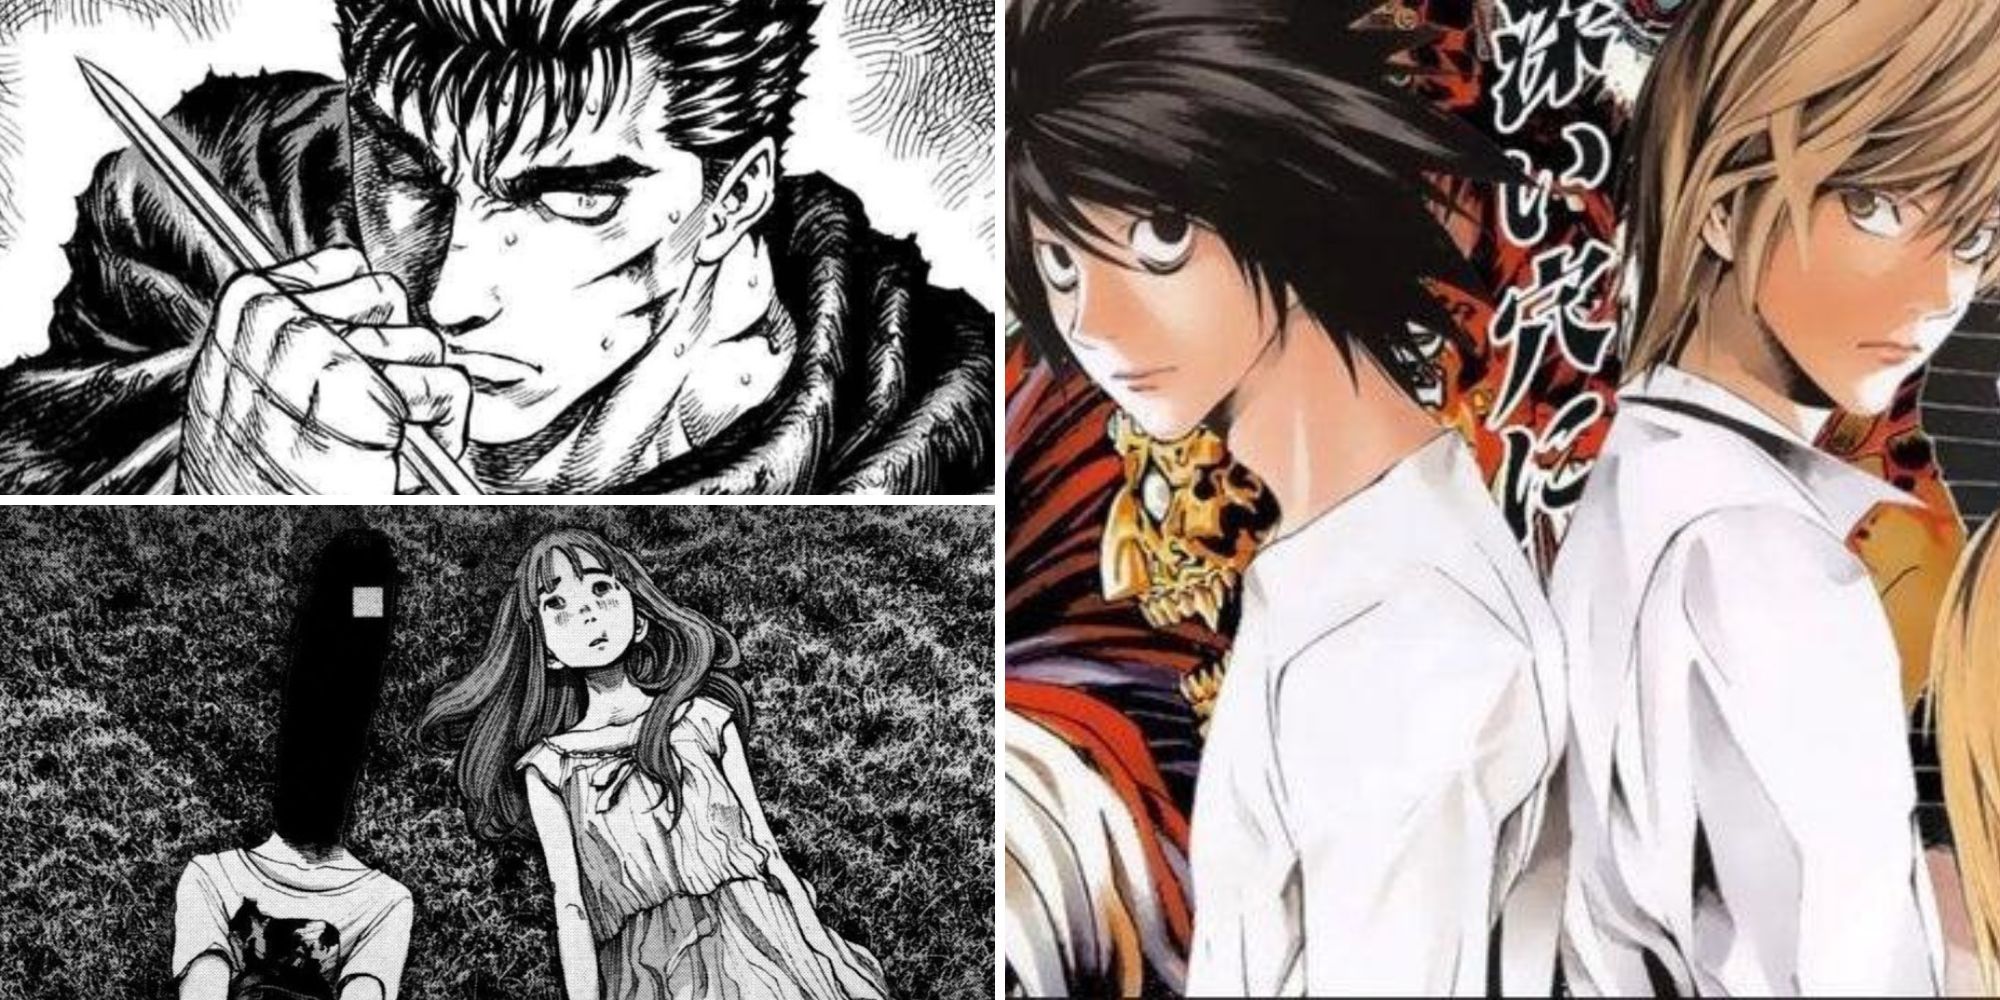 Collage of the Darkest Manga Series (Berserk, Goodnight Punpun, Death Note)